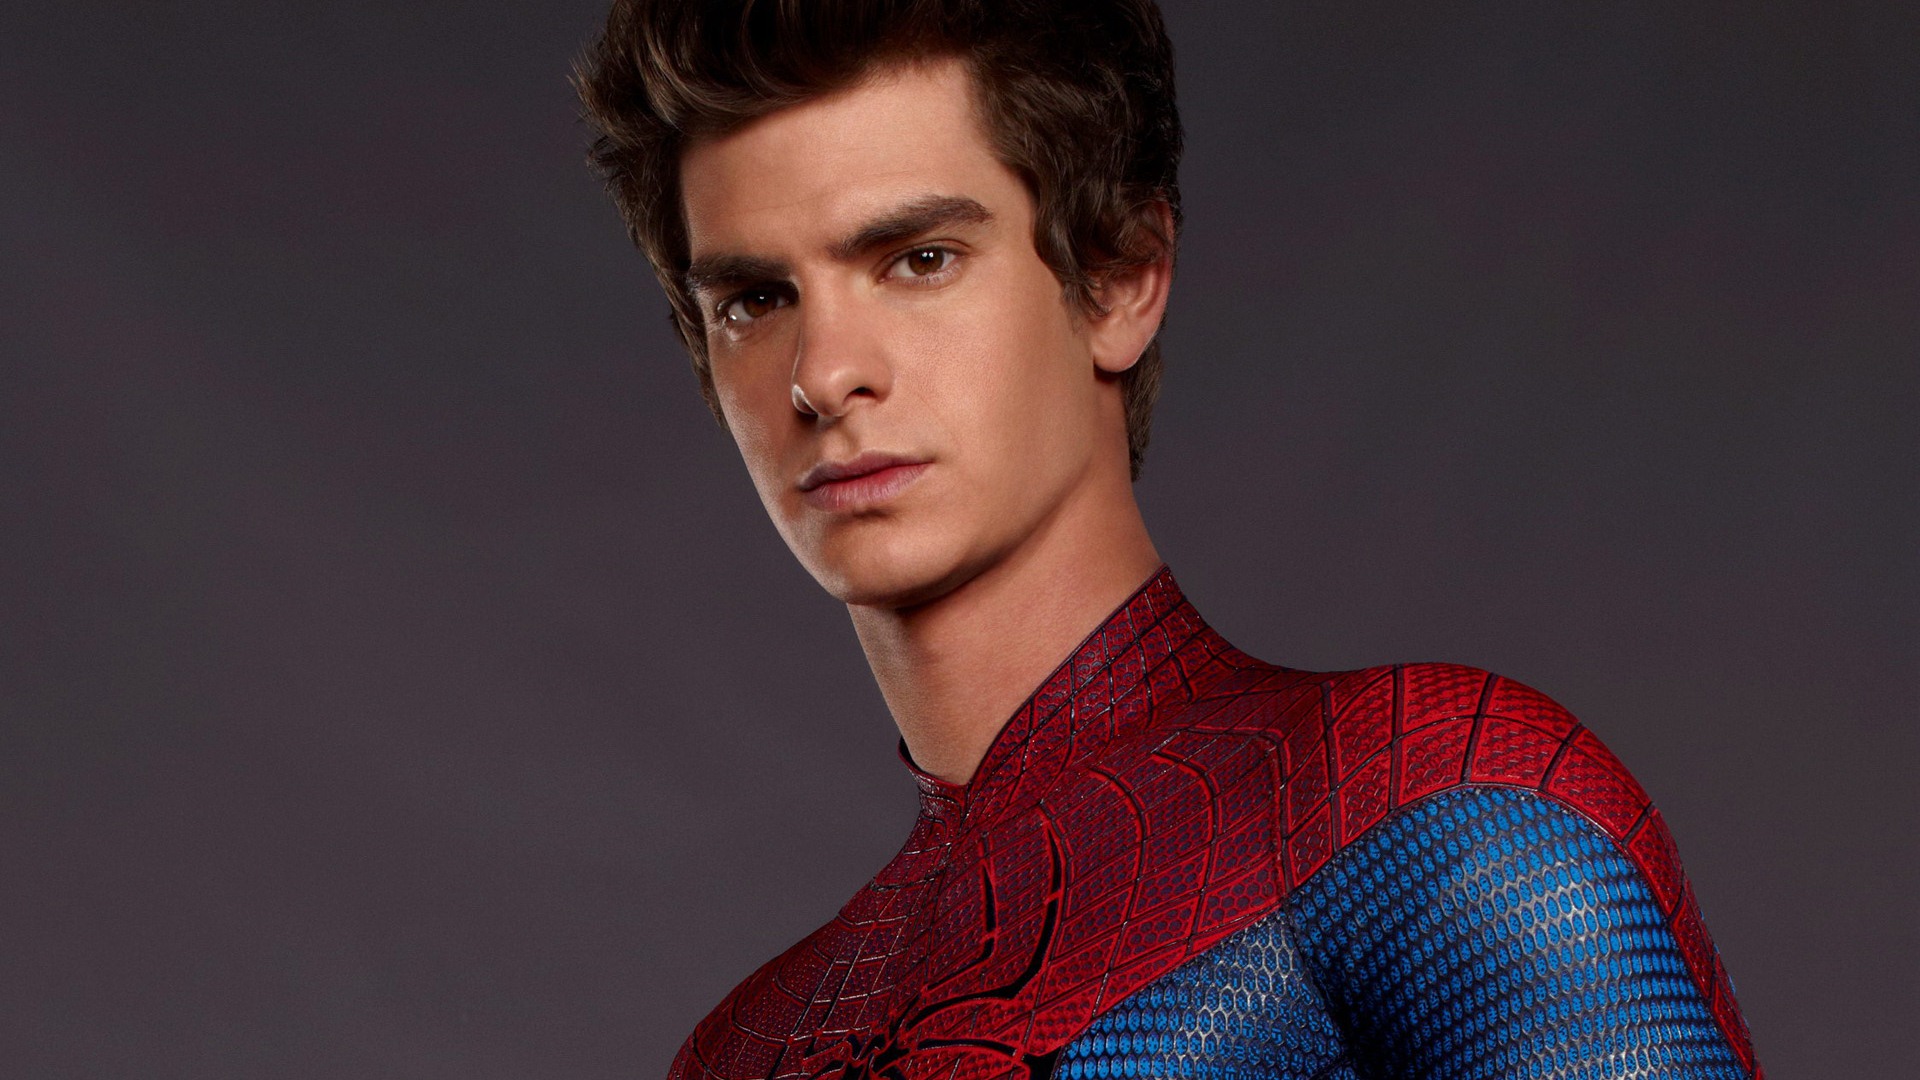 The Amazing Spider-Man 2012 驚奇蜘蛛俠2012 壁紙專輯 #2 - 1920x1080